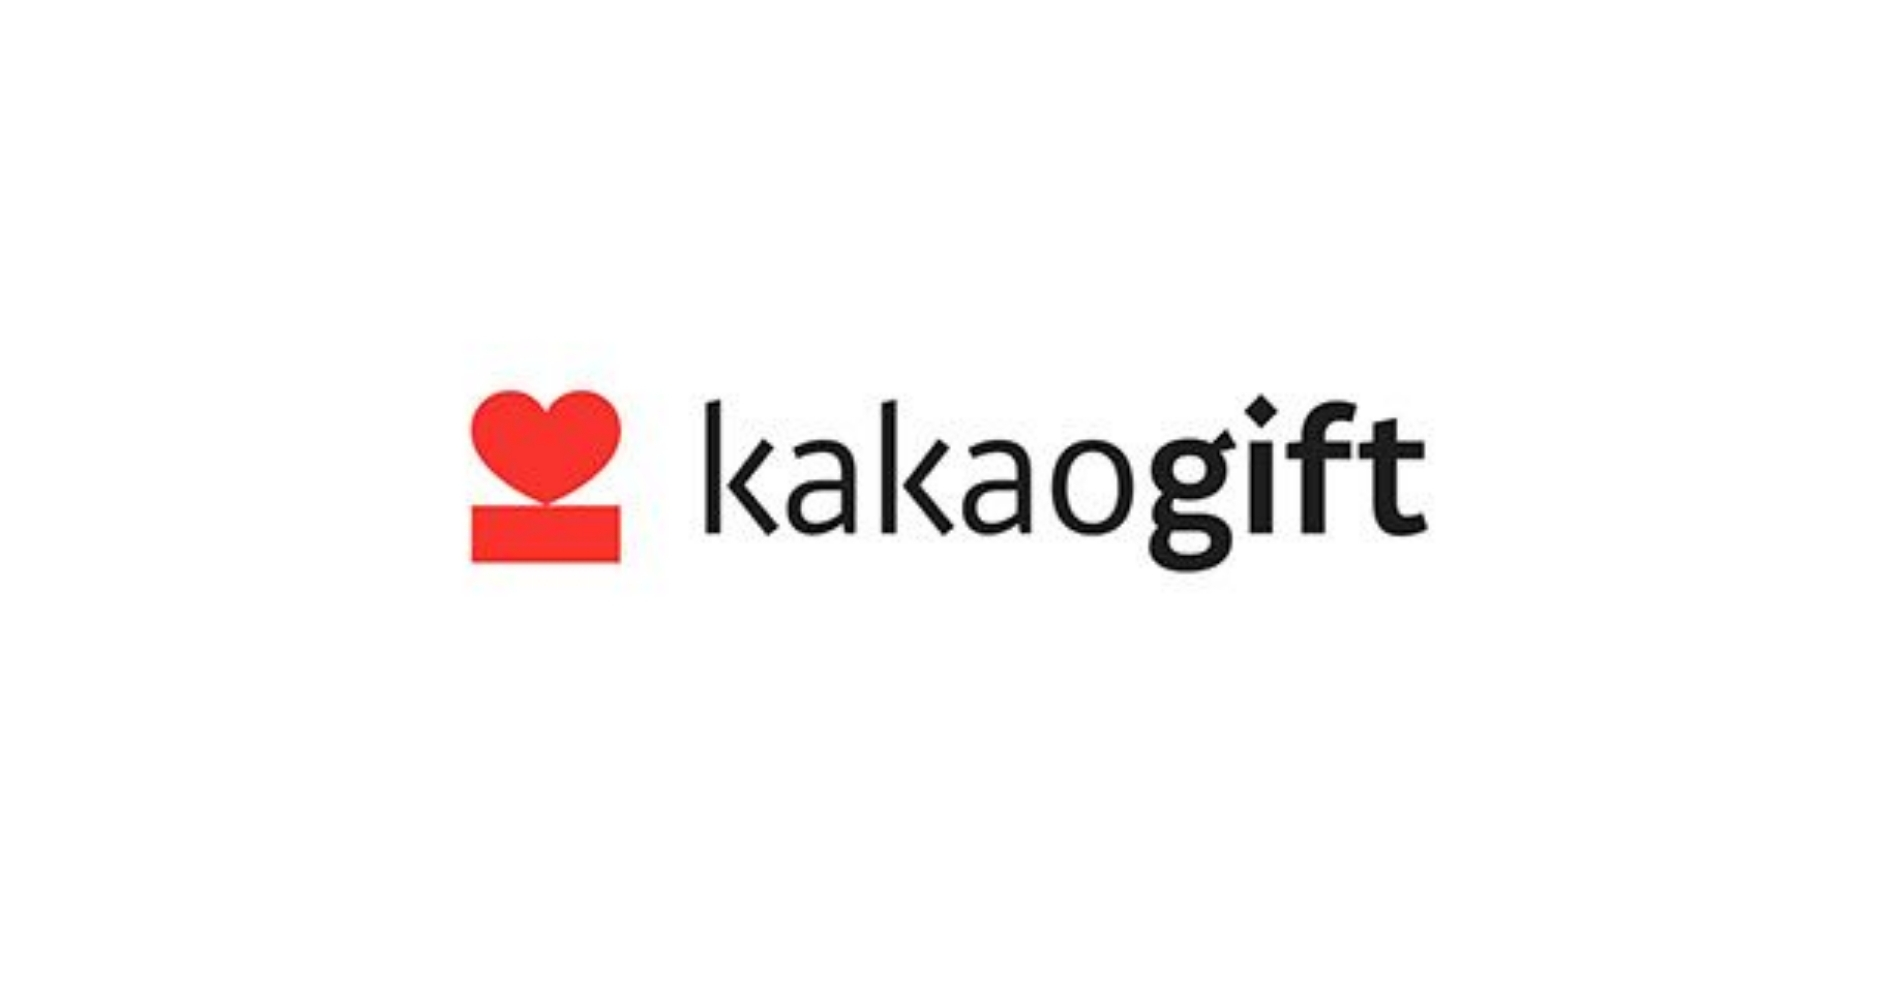 KakaoGift Illuistration Web Bisnis Muda - Google